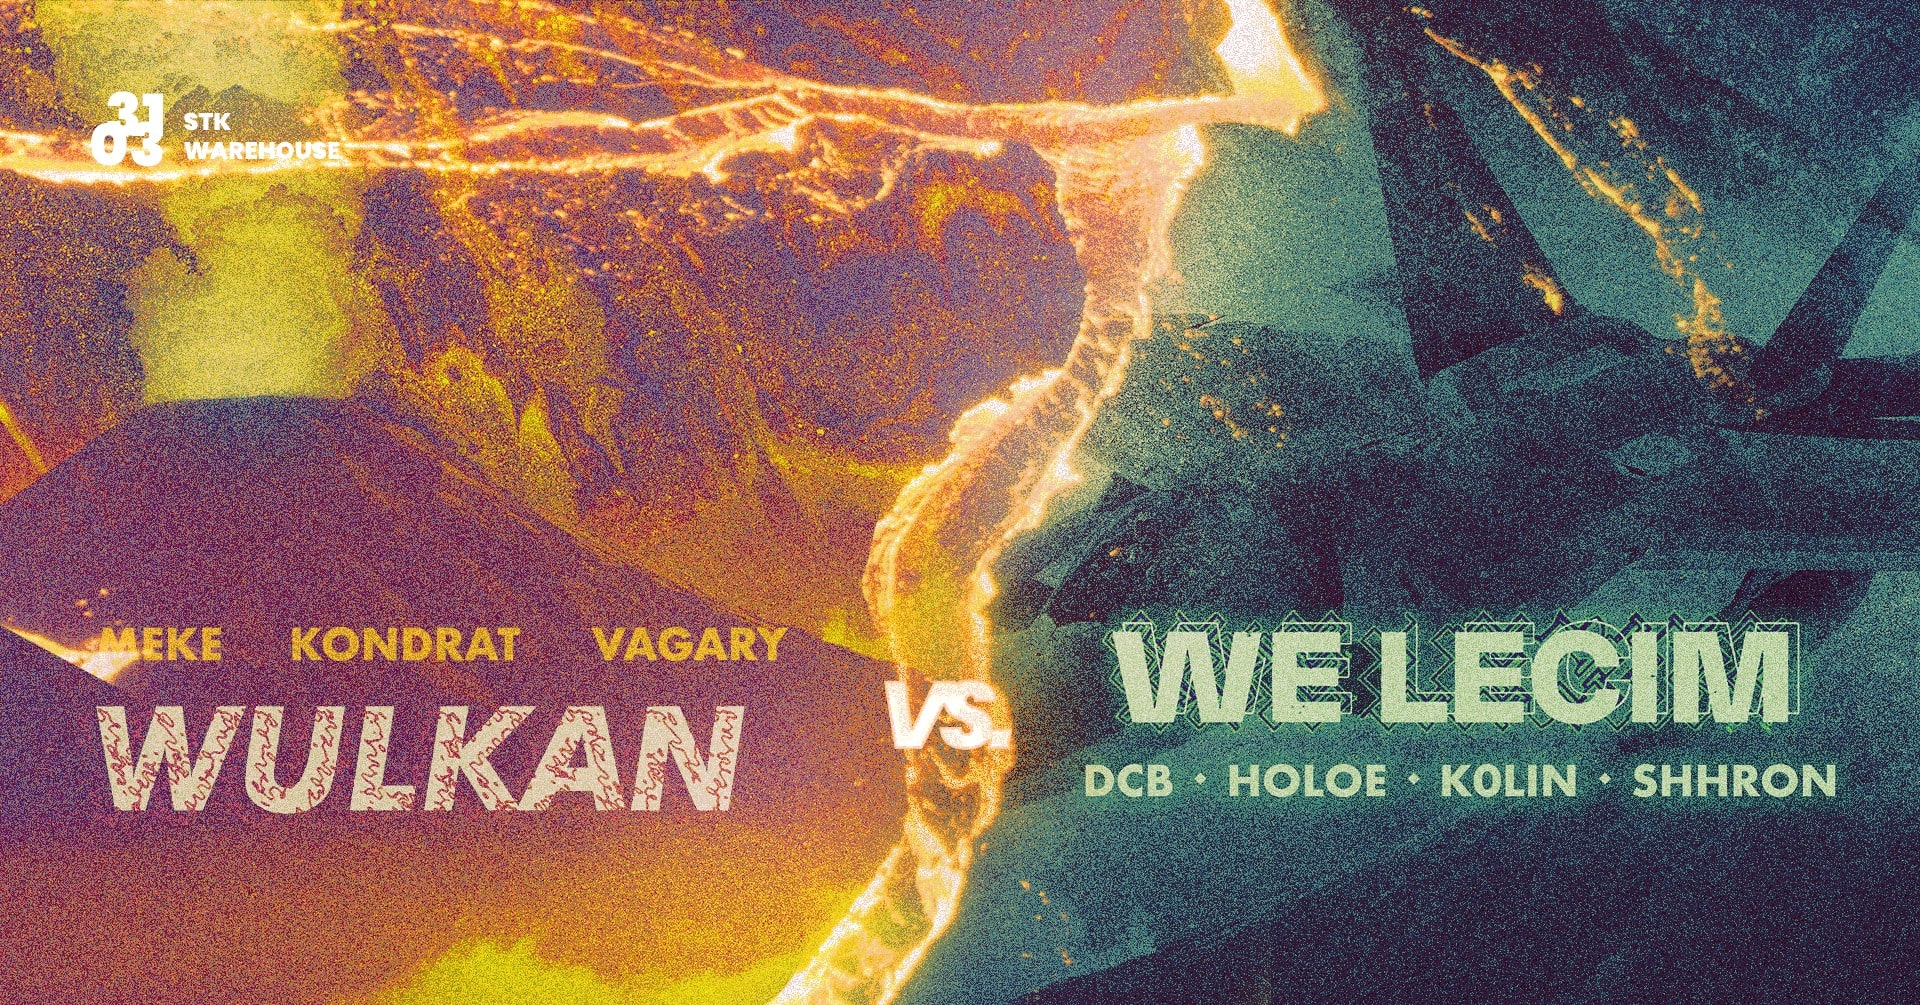 Wulkan vs. We Lecim